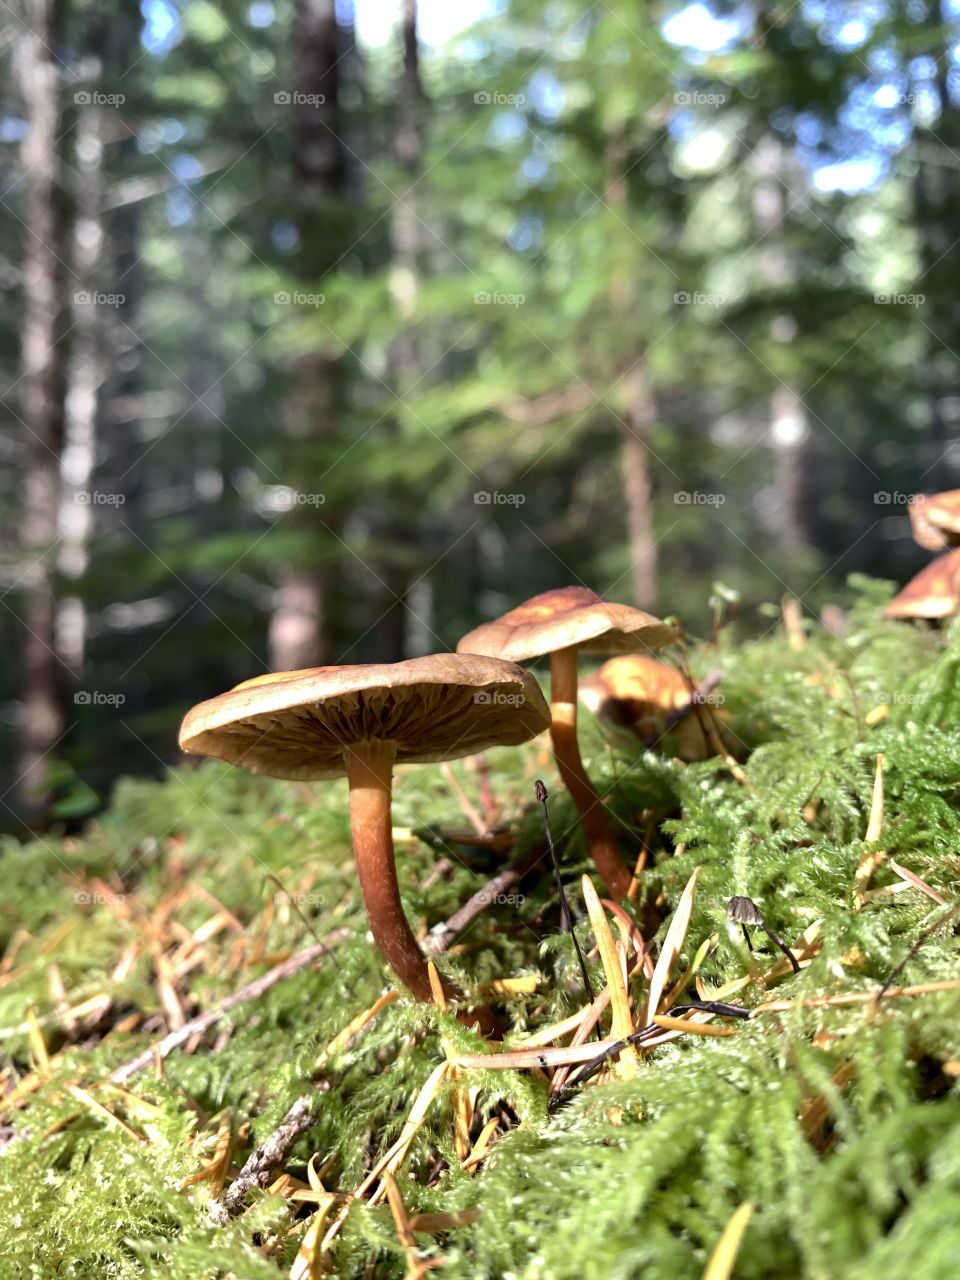 Wild mushrooms 